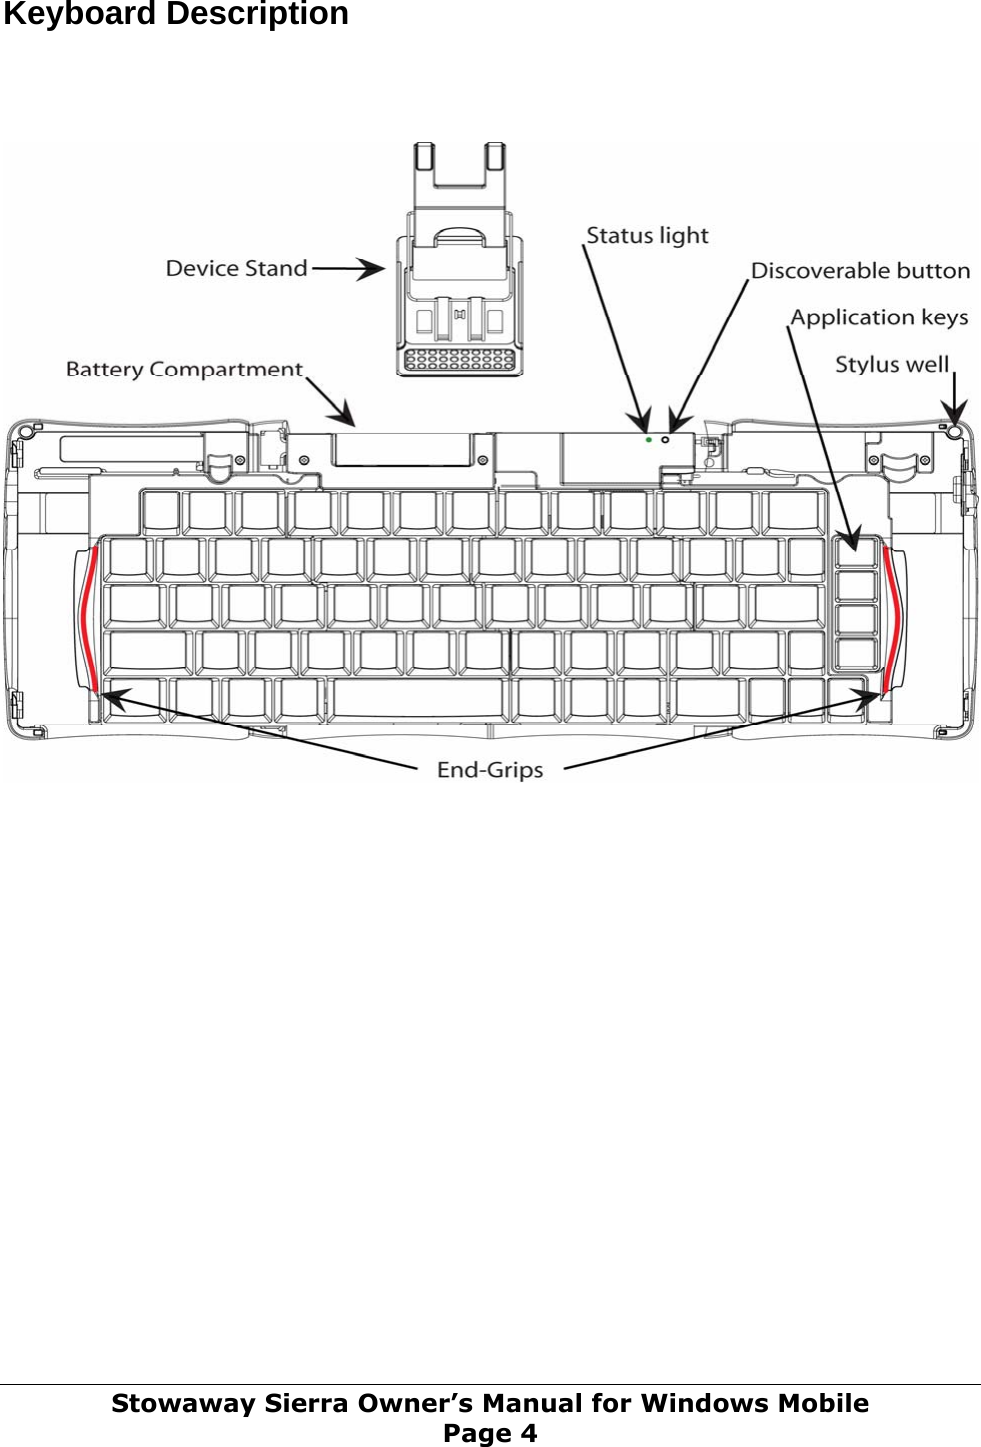 Keyboard Description                     Stowaway Sierra Owner’s Manual for Windows Mobile Page 4 